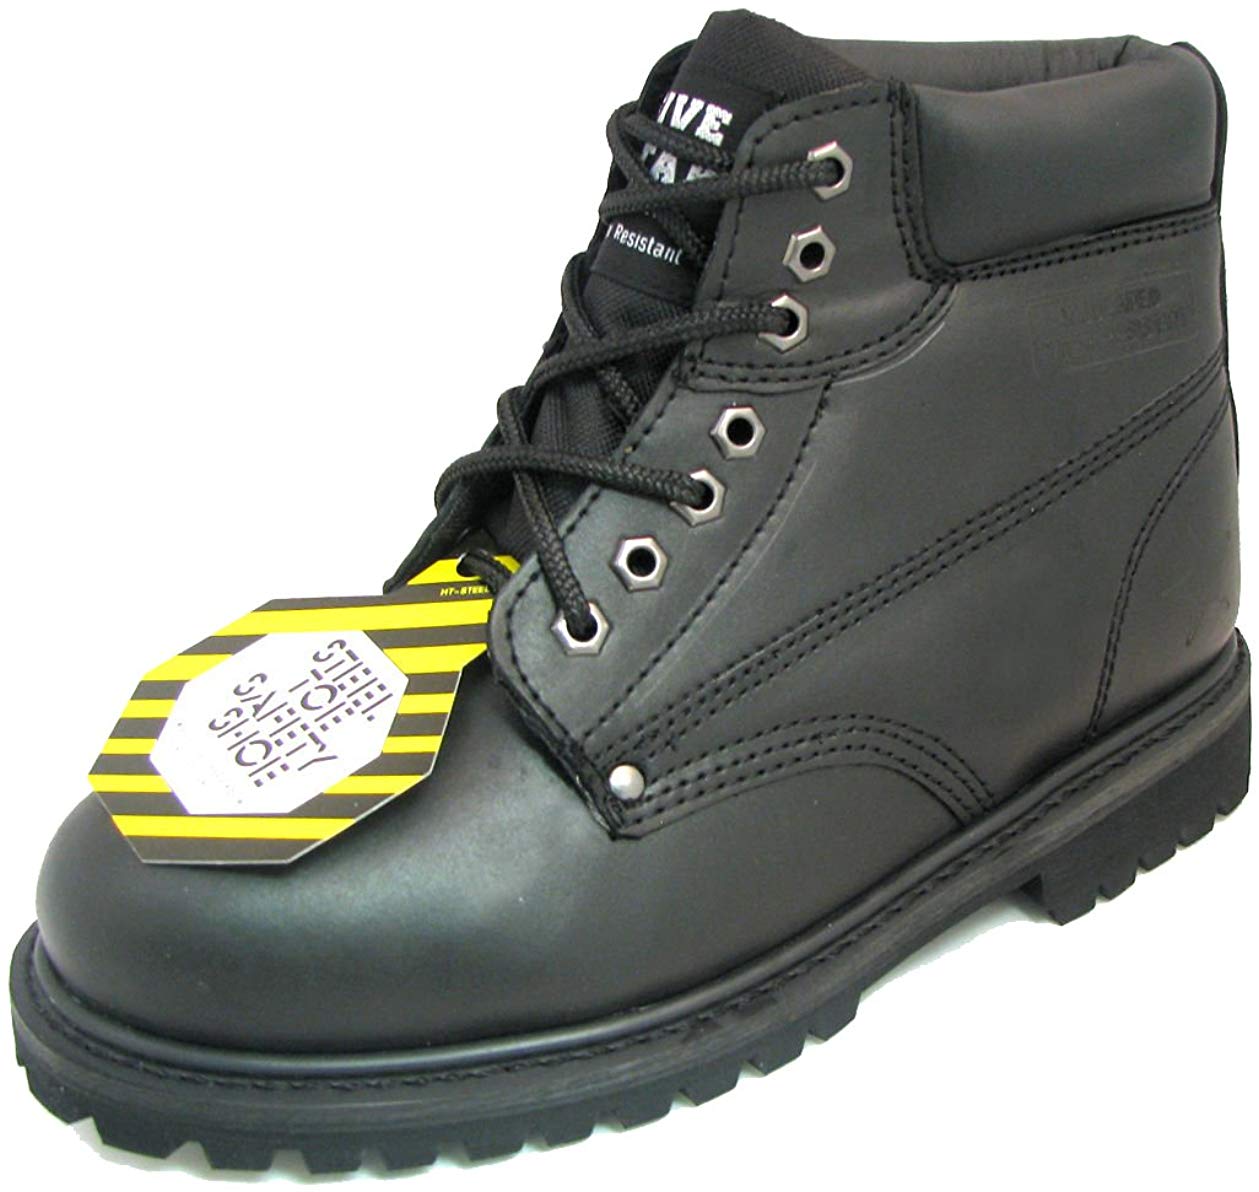 Men's Steel Toe Work Boots 6" Leather Lug Sole Water Resistant Slip /Oil Resistant - image 1 of 4